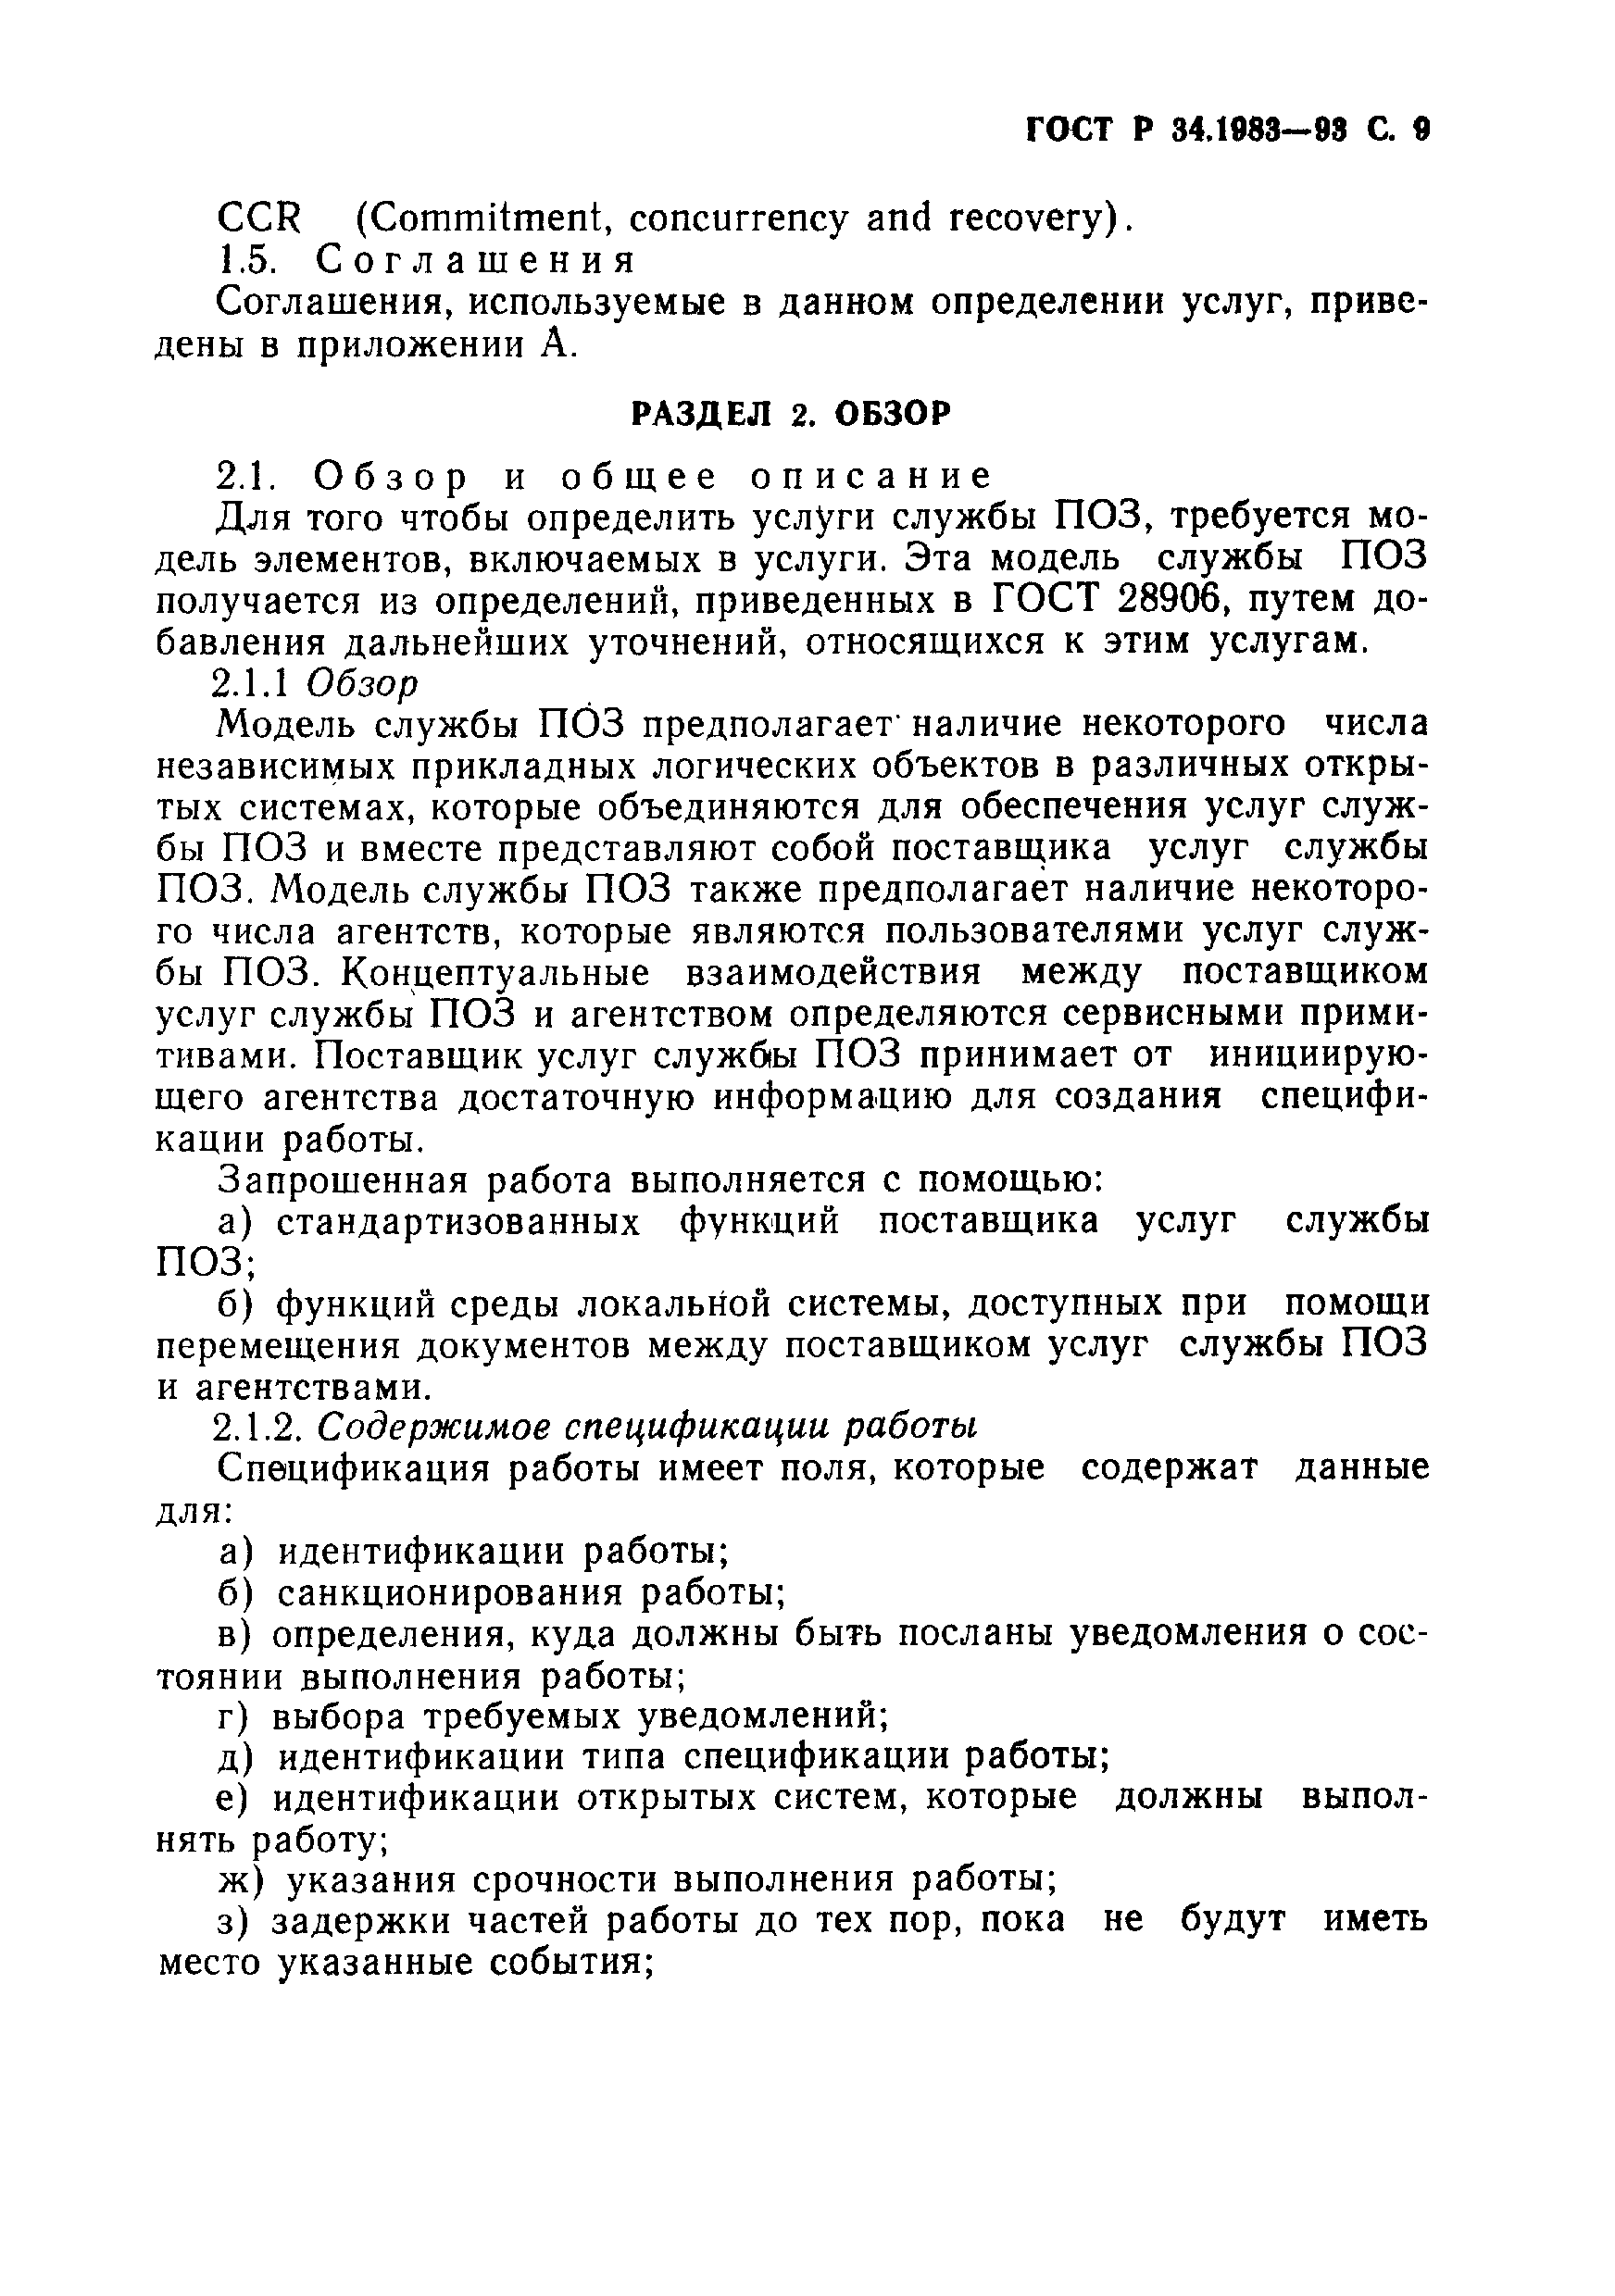 ГОСТ Р 34.1983-93. Страница 10